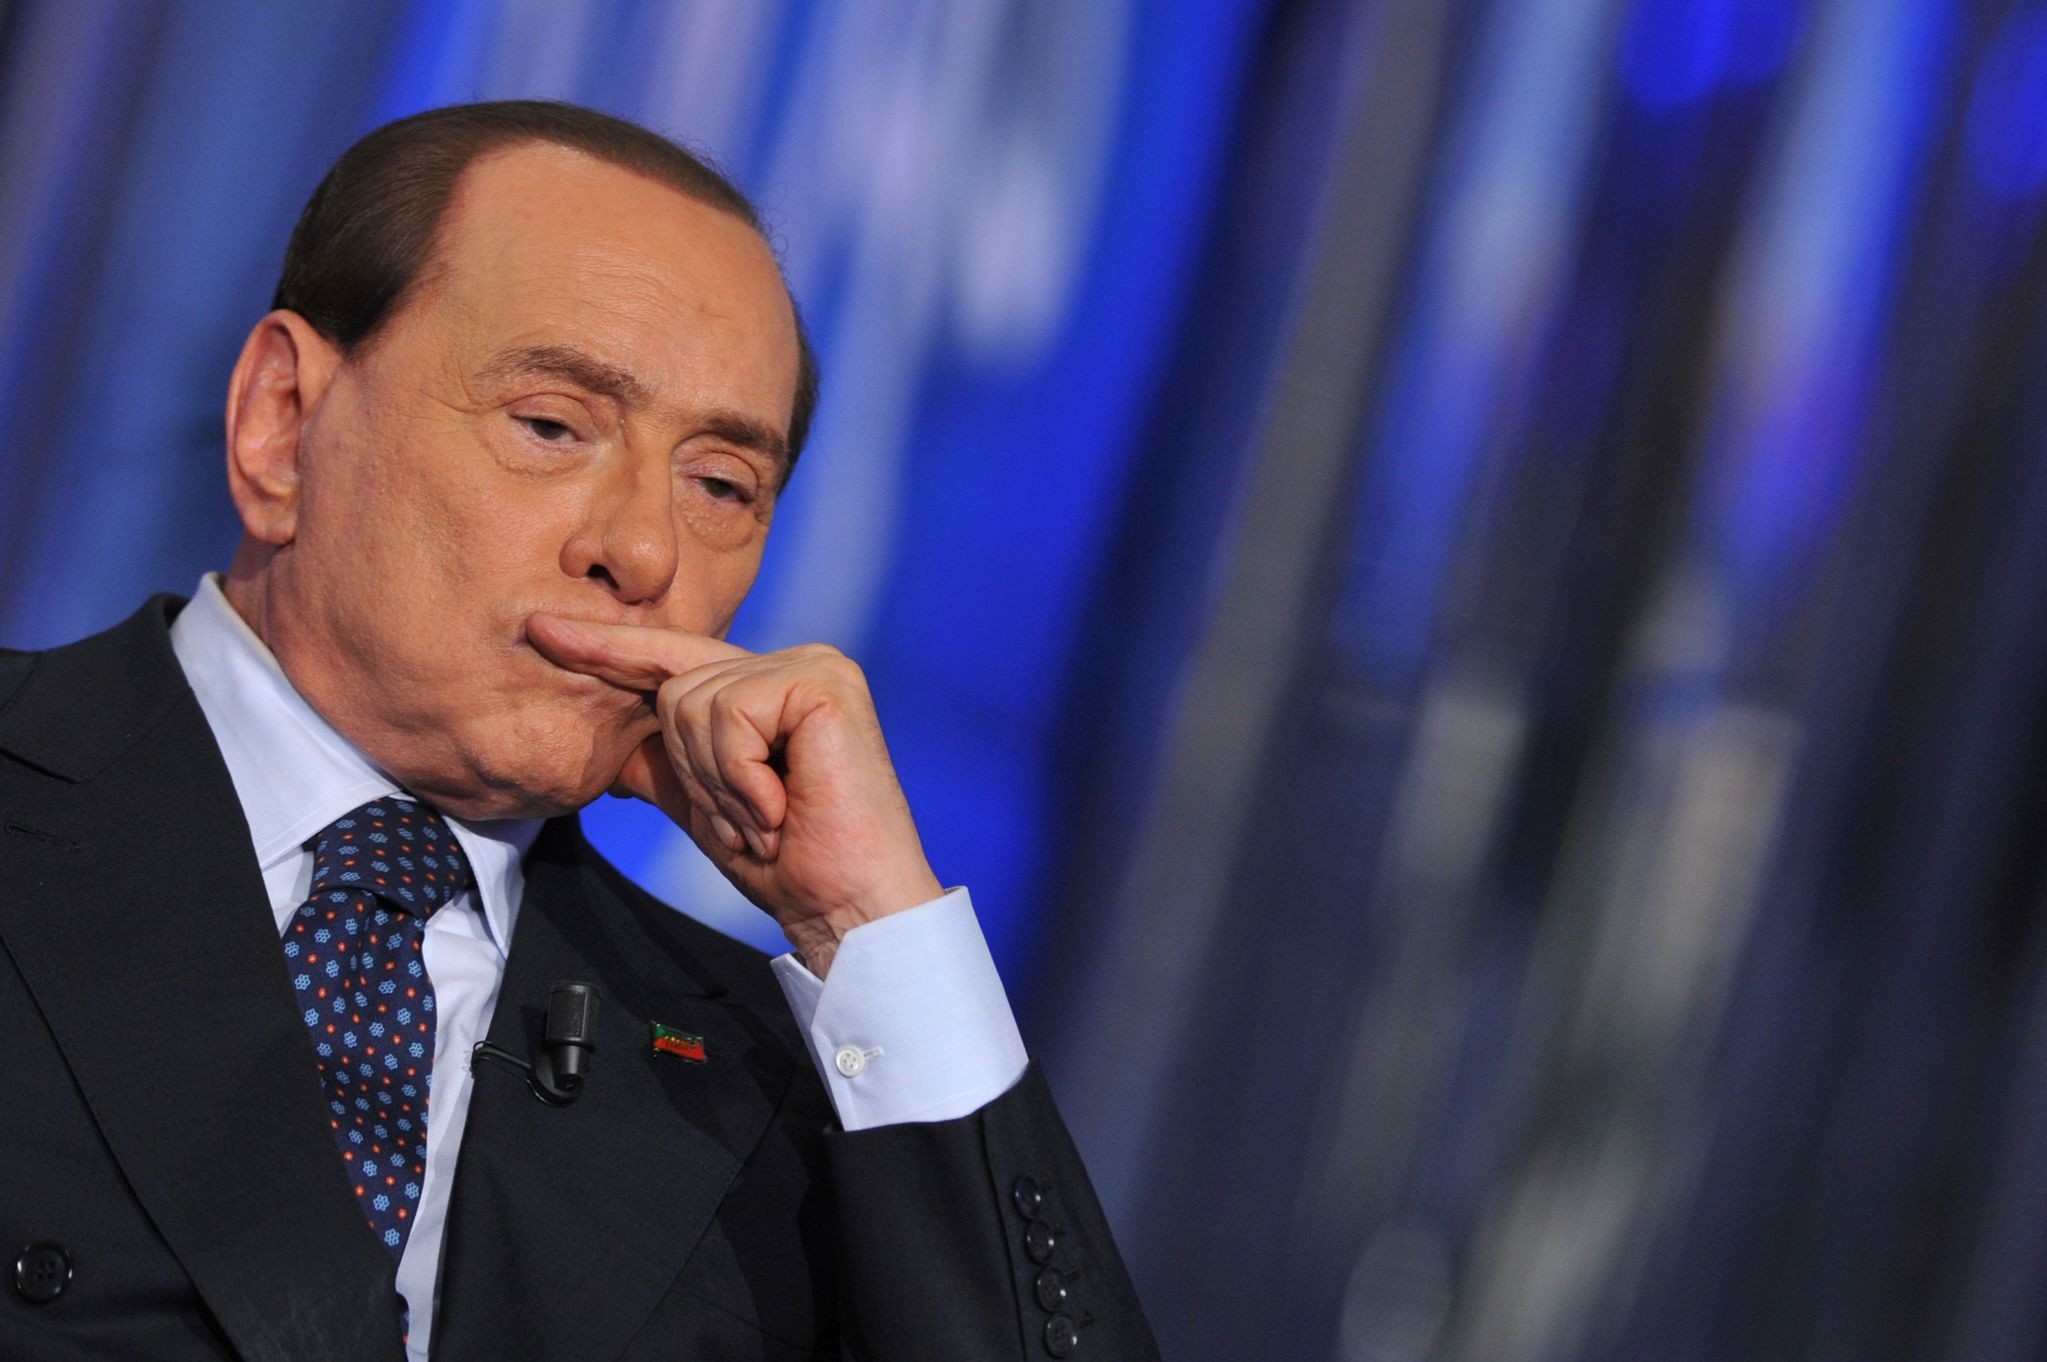  Italian former Prime Minister Silvio Berlusconi attending the ,Porta a Porta, TV show at the Rai 1 headquarters.  (AFP Photo)